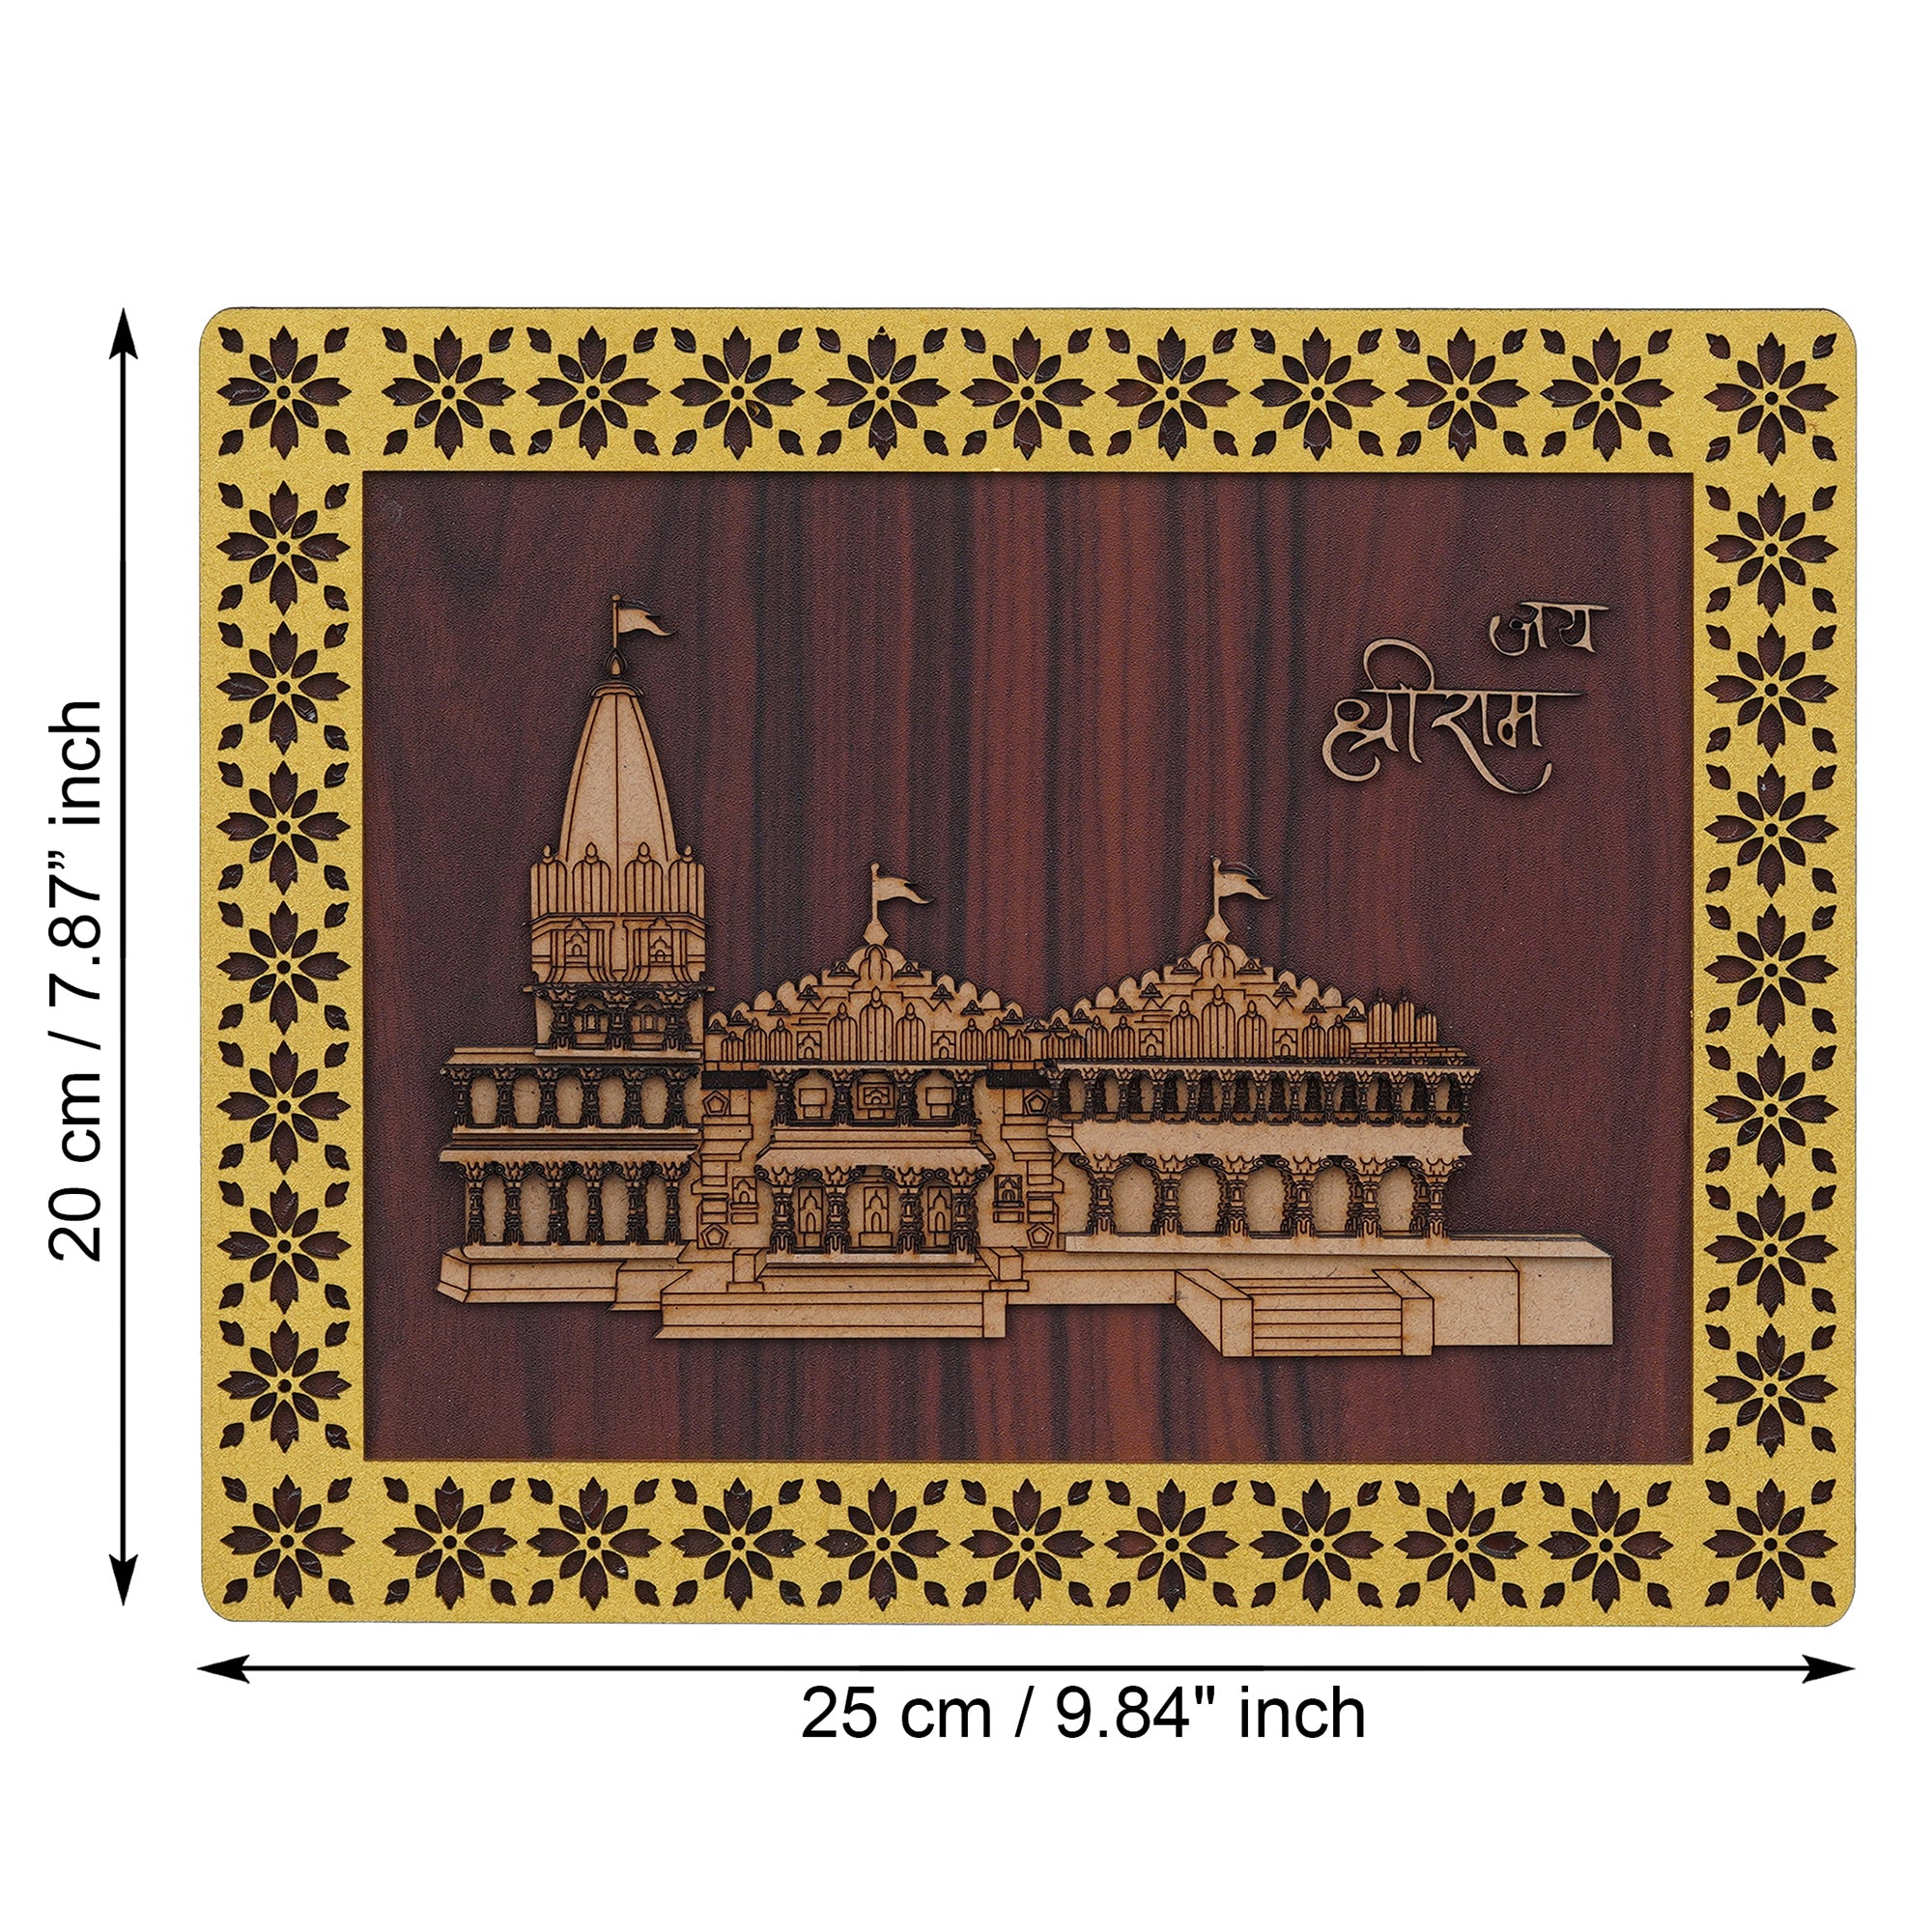 eCraftIndia Jai Shri Ram Mandir Ayodhya Decorative Wooden Frame - Religious Wall Hanging Showpiece for Home Decor, and Spiritual Gifting (Gold, Beige) 3